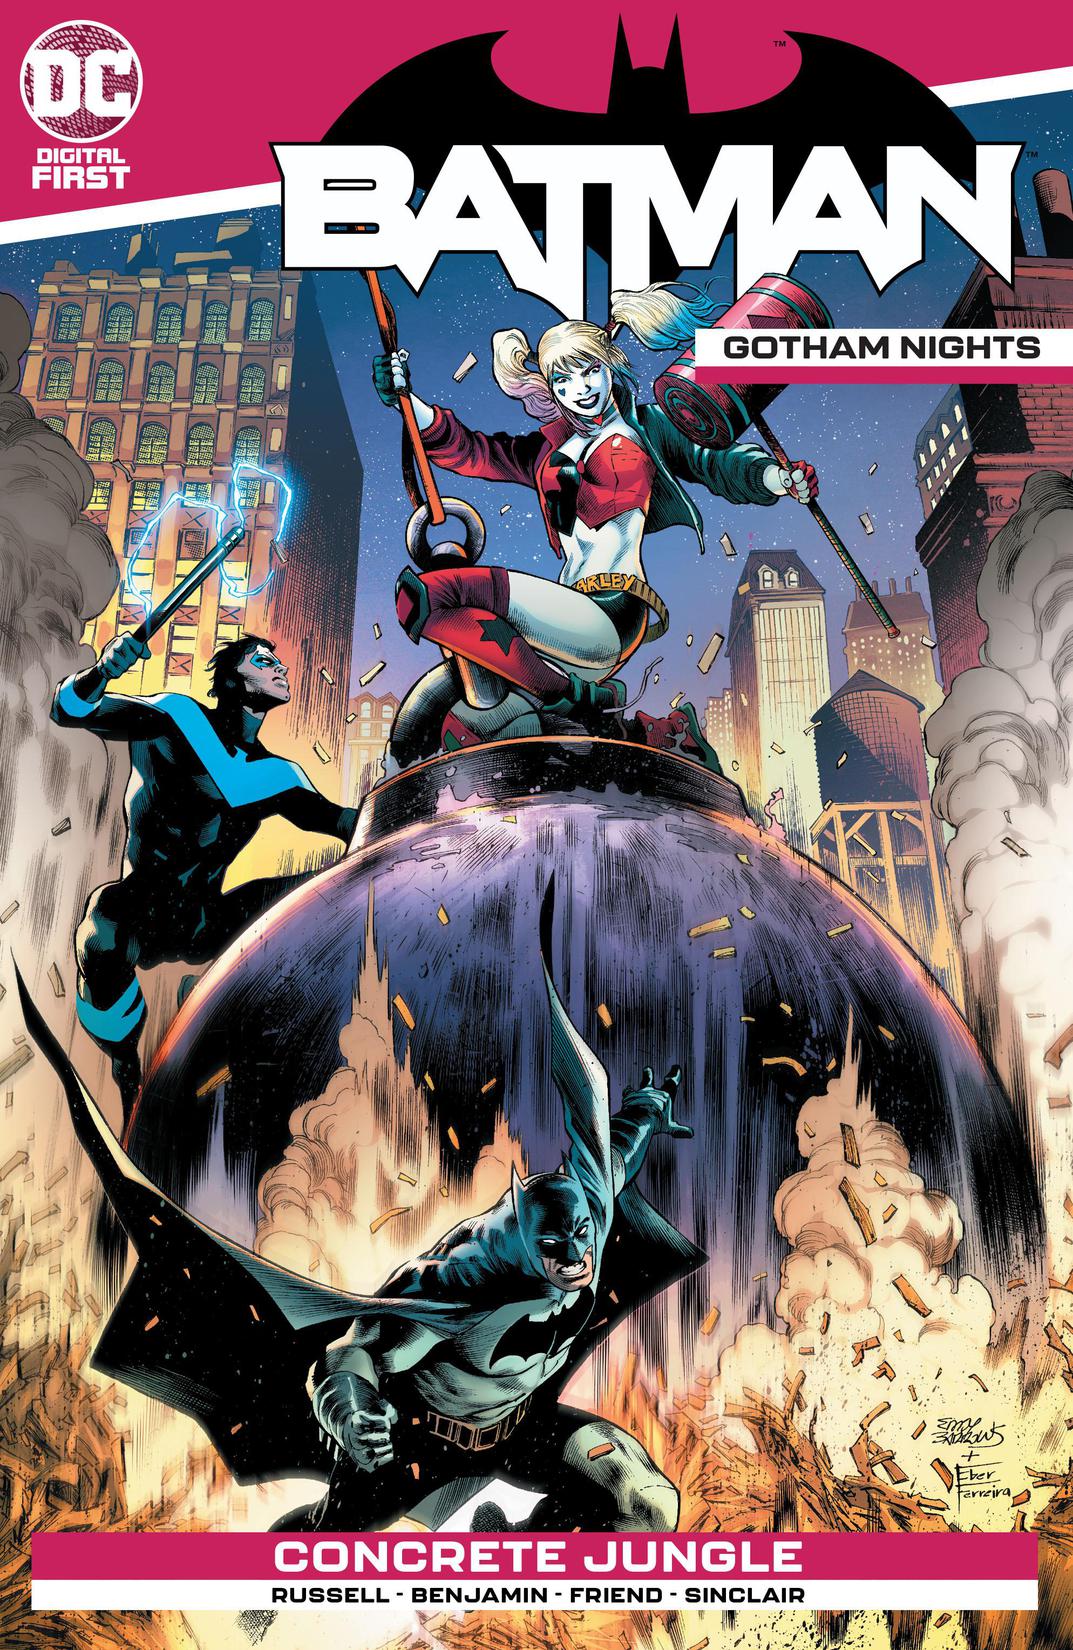 Batman: Gotham Nights #5 preview images